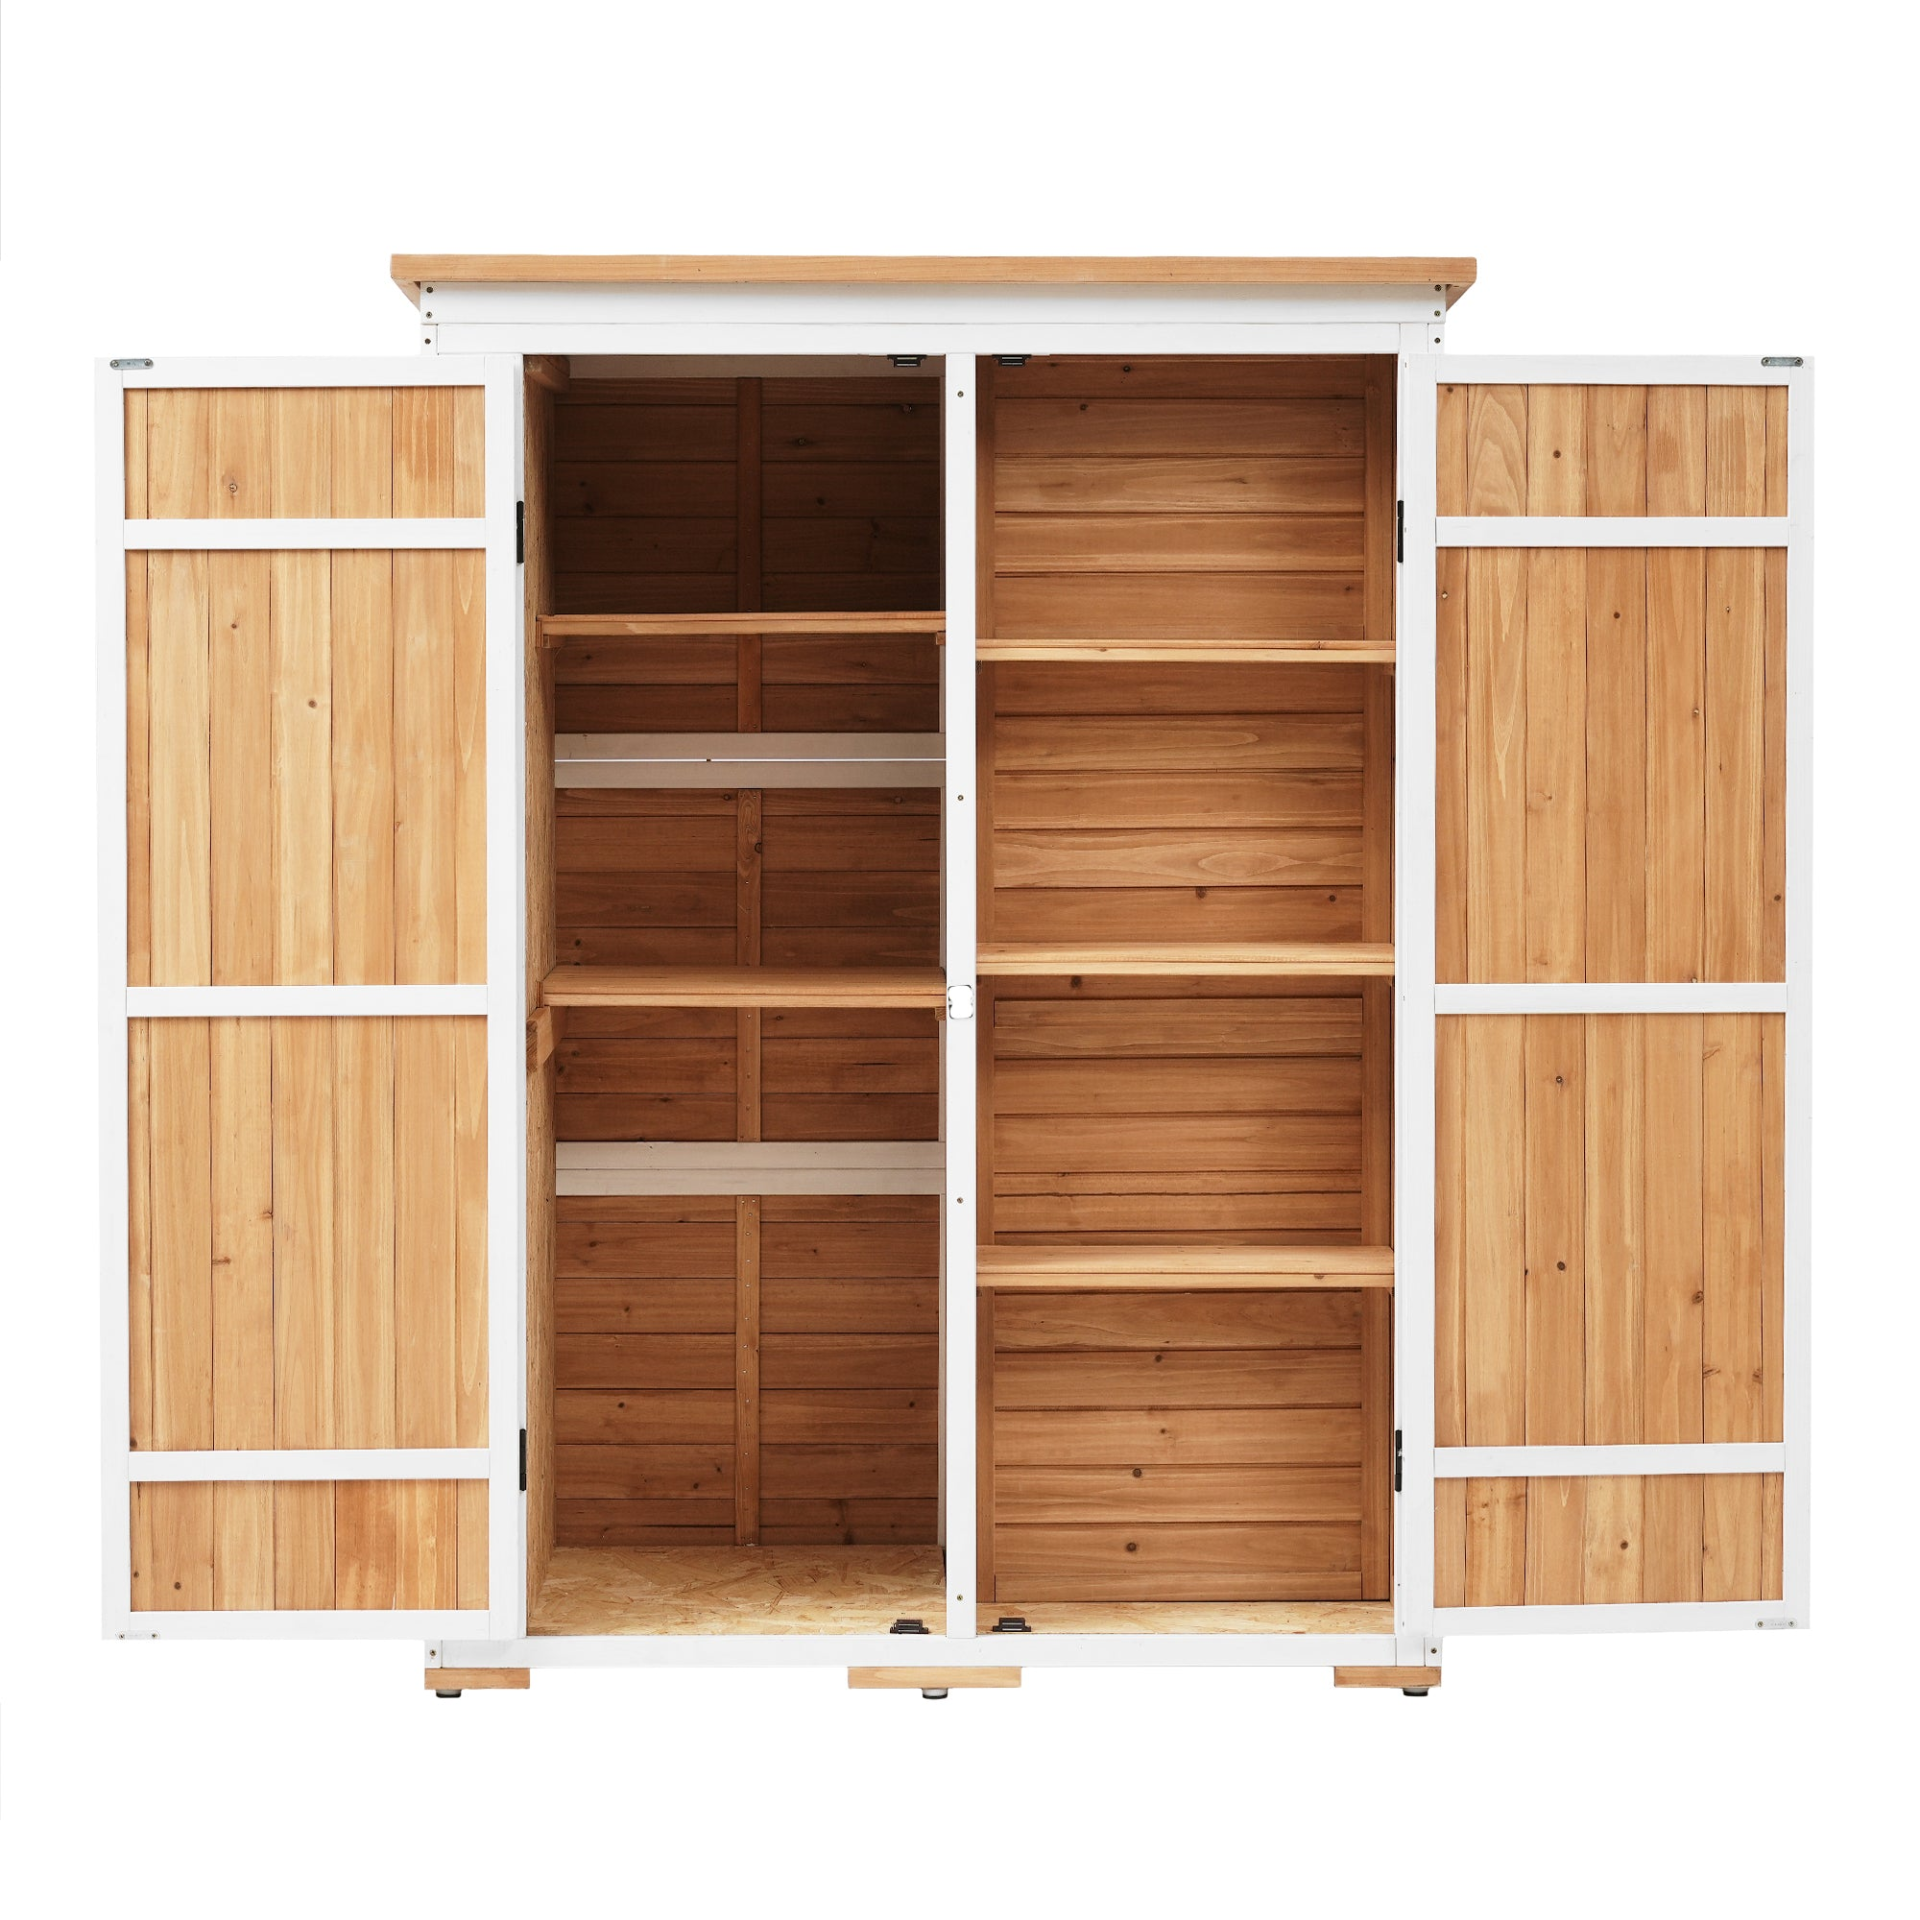 Outdoor 5.5ft Hx4.1ft L Wood Storage Shed, Garden Tool Cabinet with Waterproof Asphalt Roof, Four Lockable Doors, Multiple-tier Shelves, Natural, Goodies N Stuff